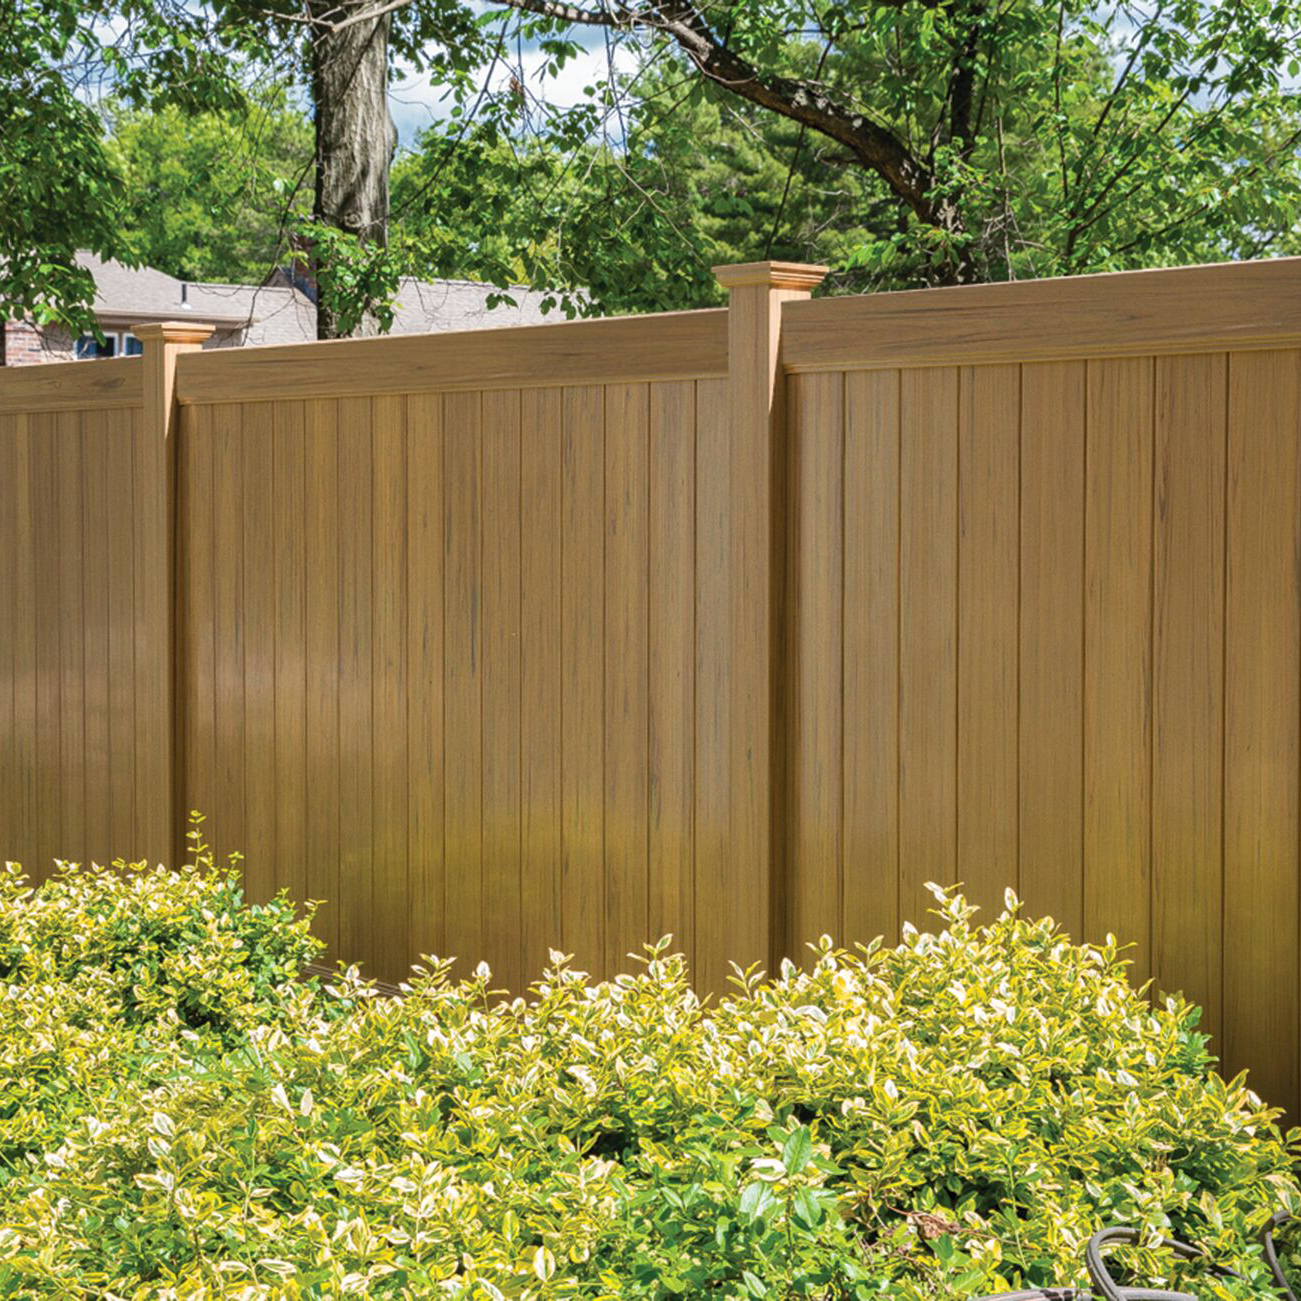 Brown vinyl fence in an Austin backyard